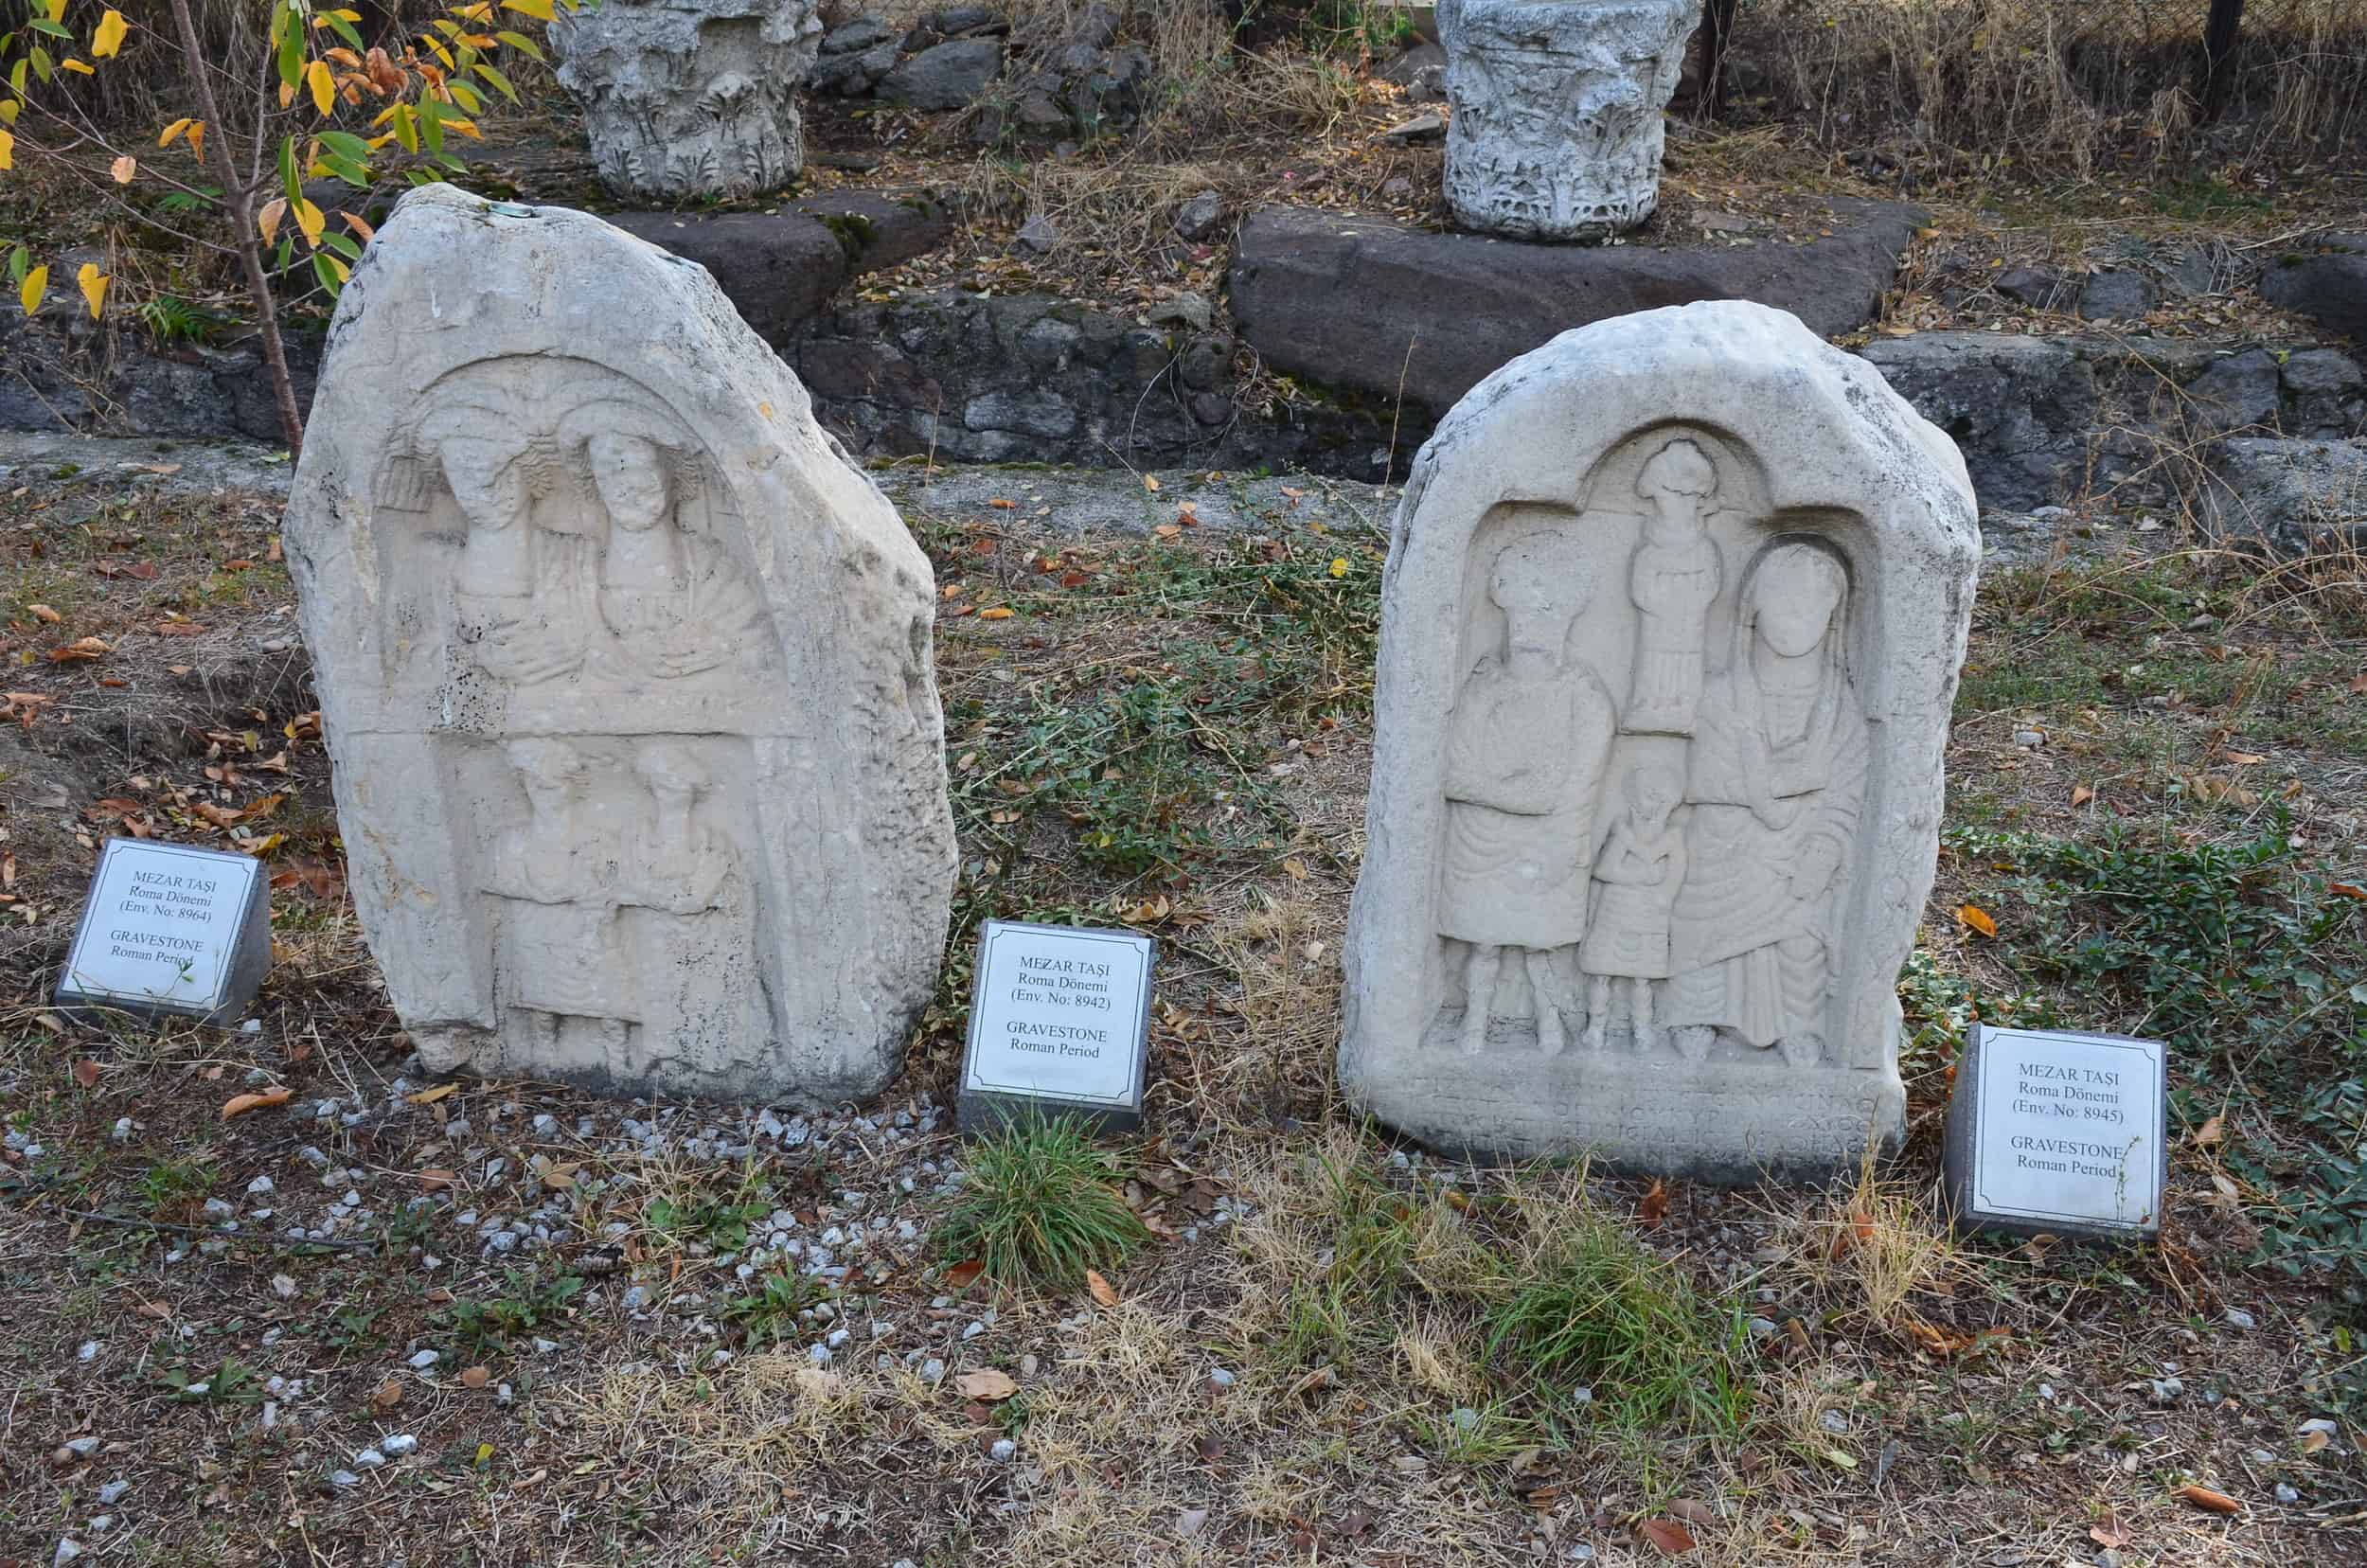 Gravestones from the Roman period